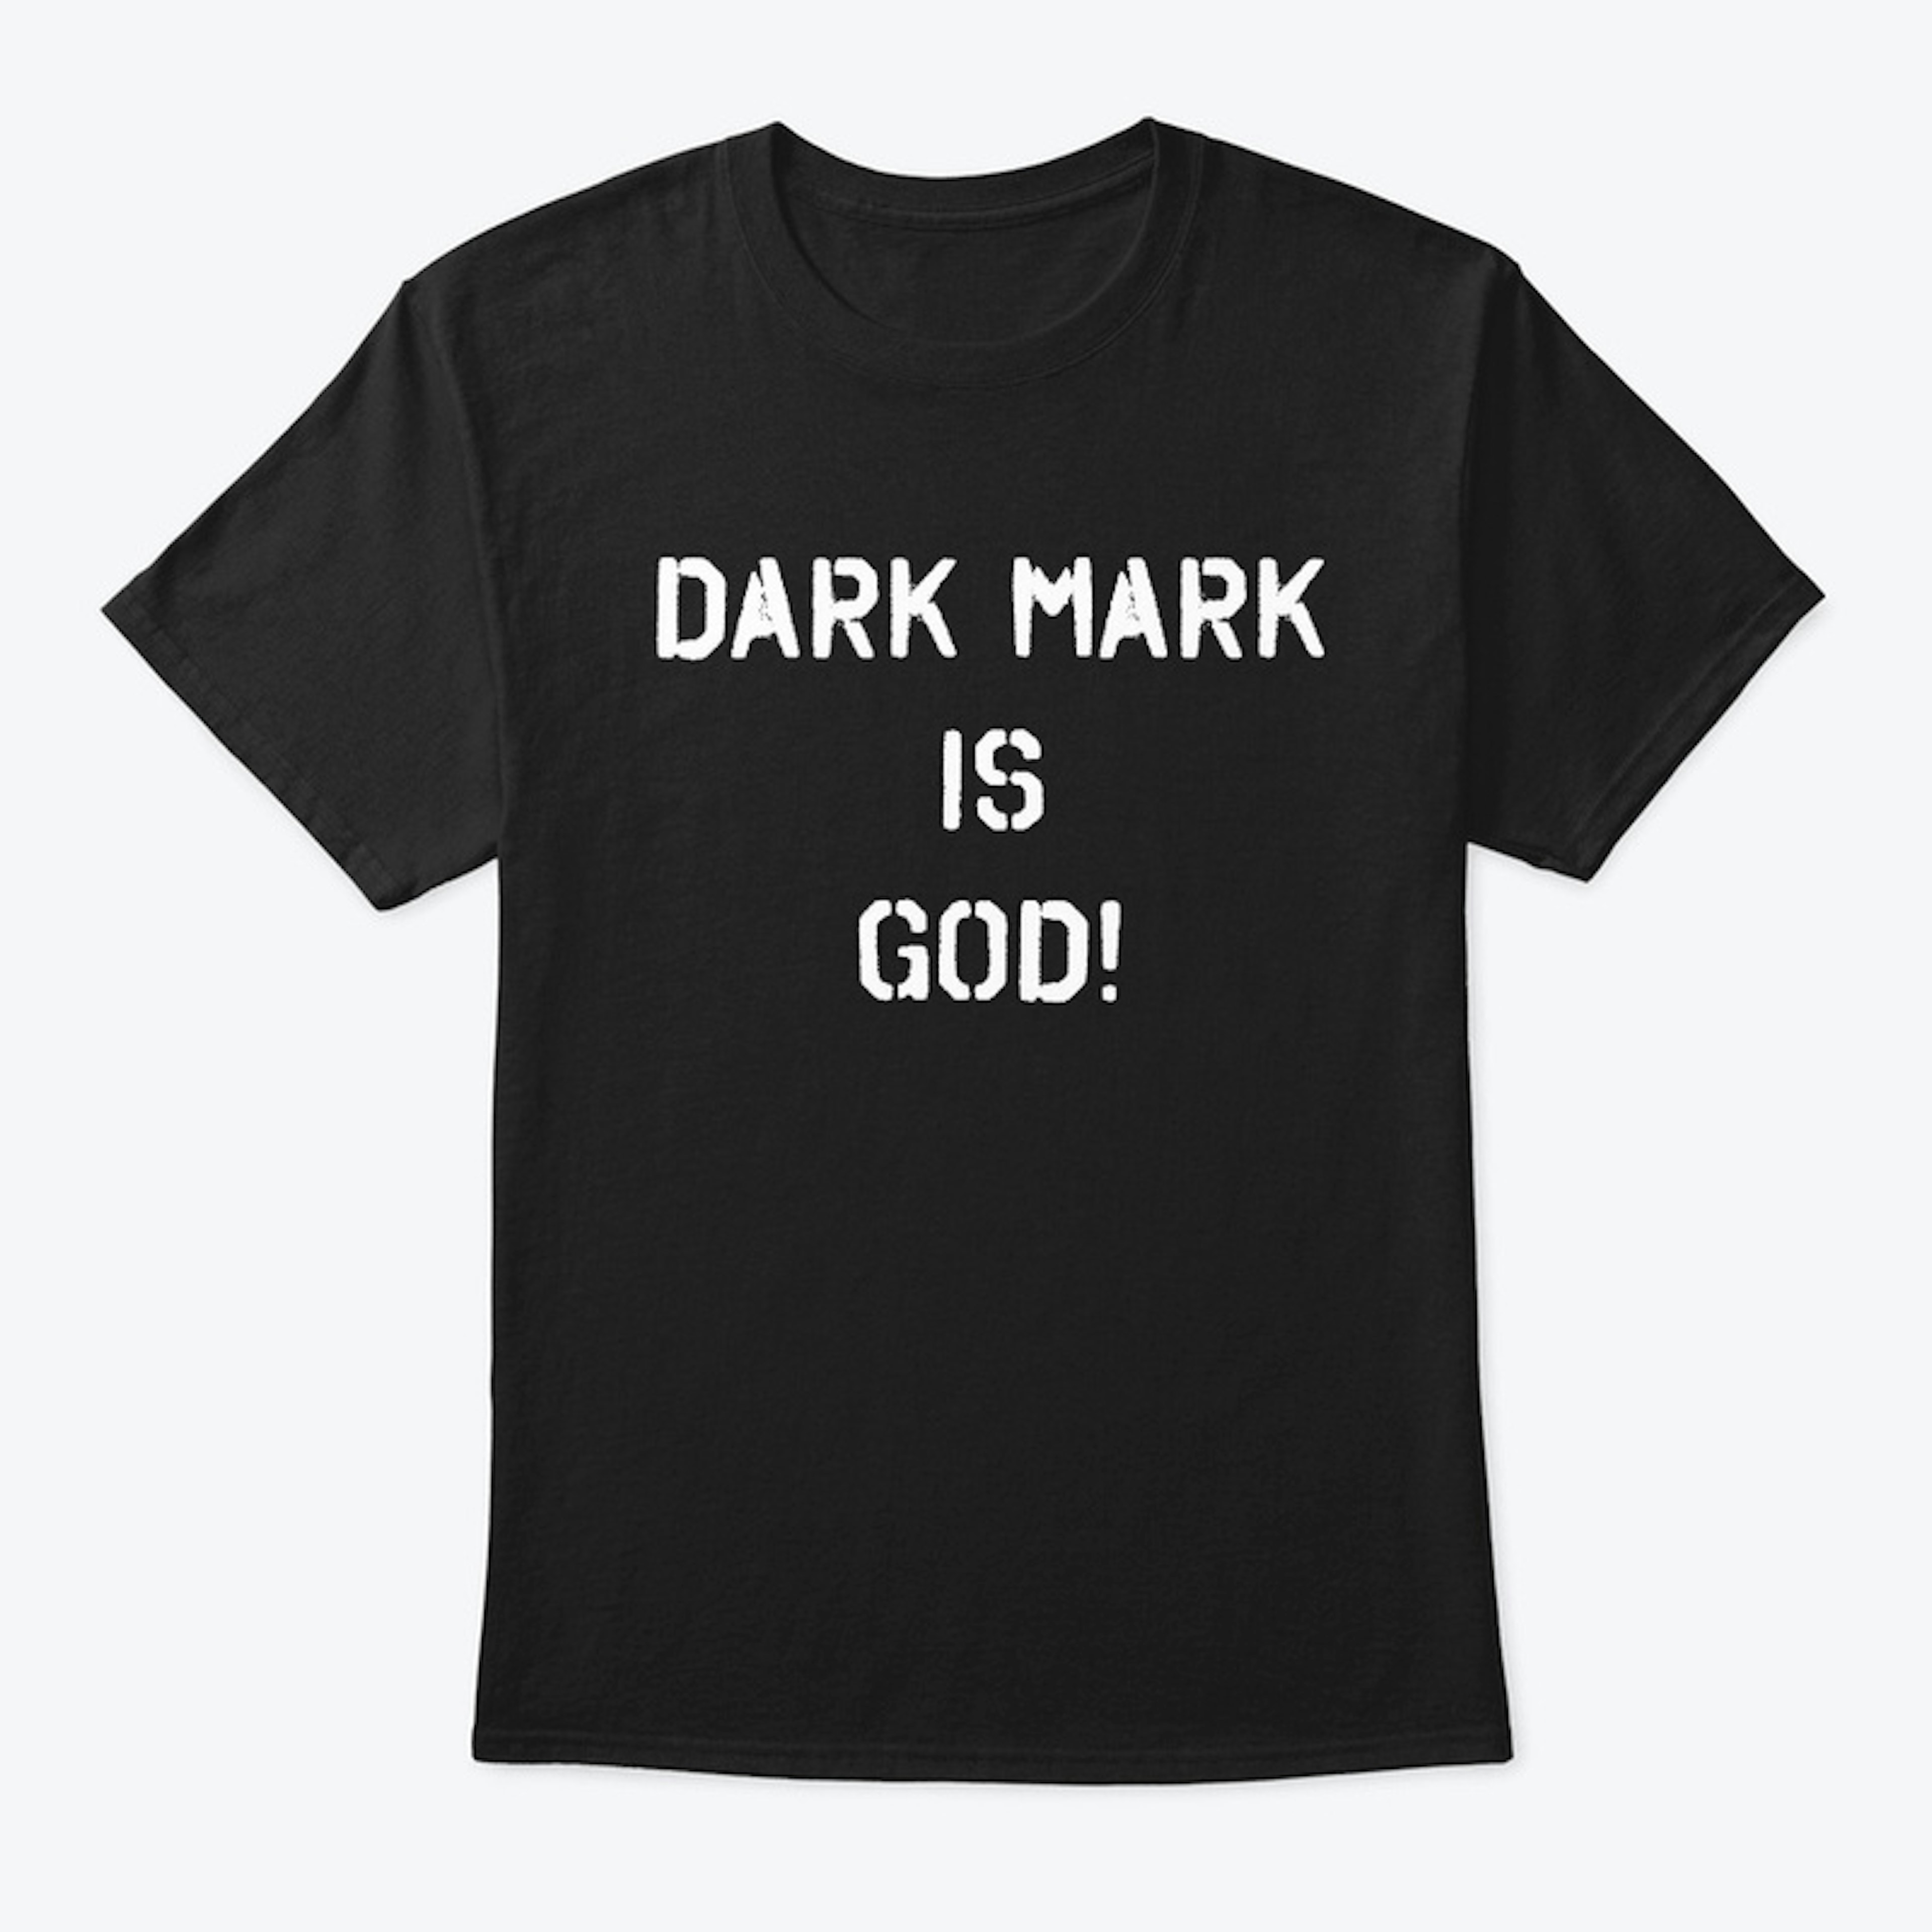 DARK MARK IS GOD!